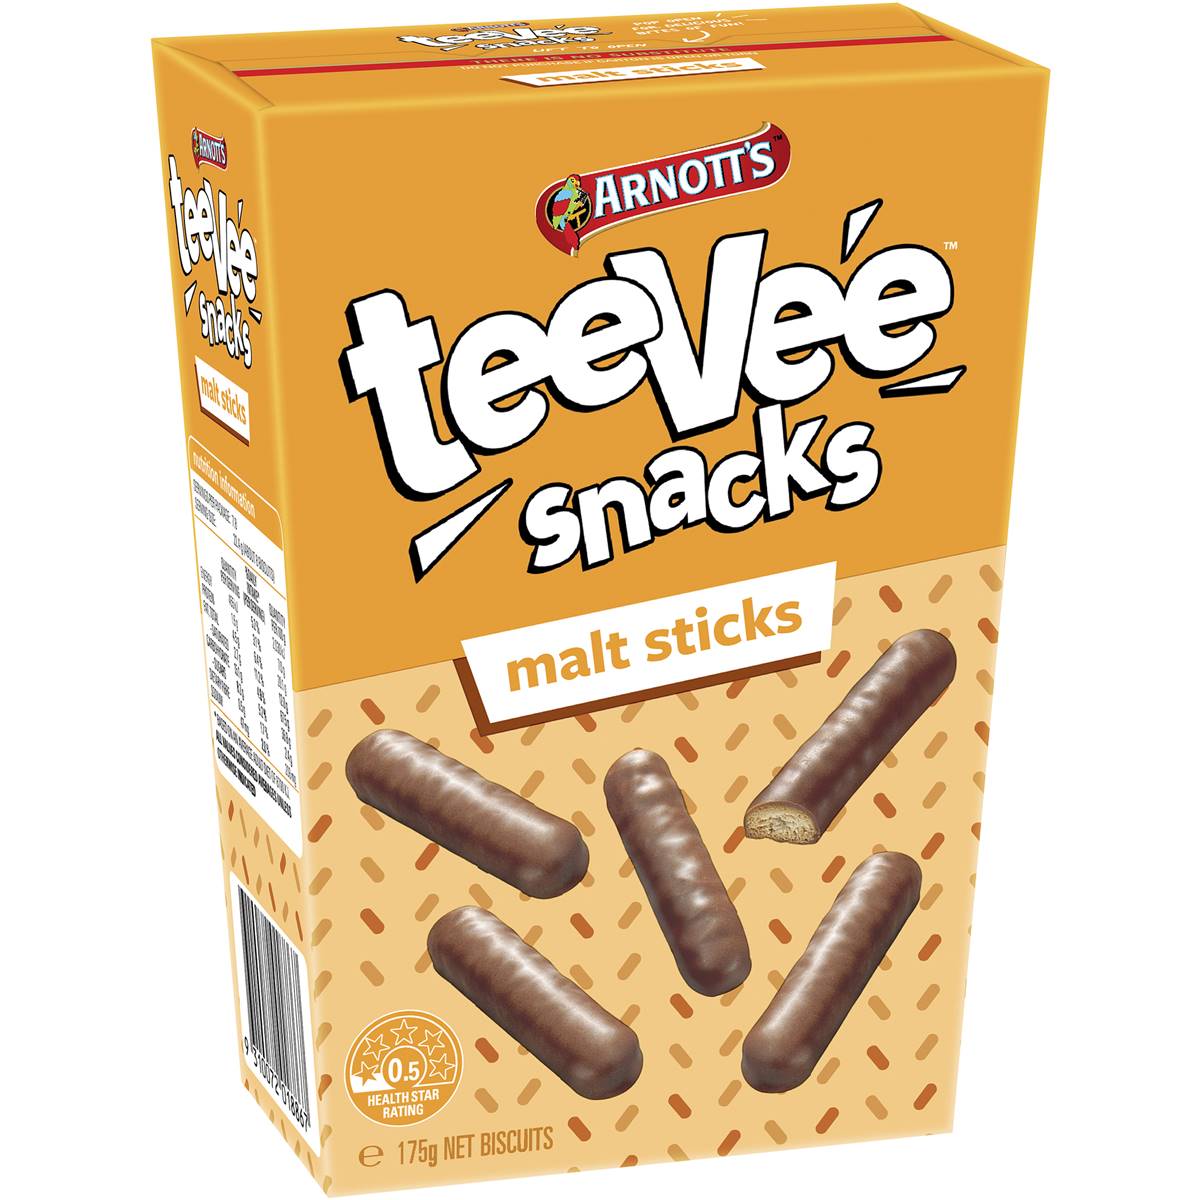 Arnotts Teevee Snacks Biscuits Malt Sticks 175g